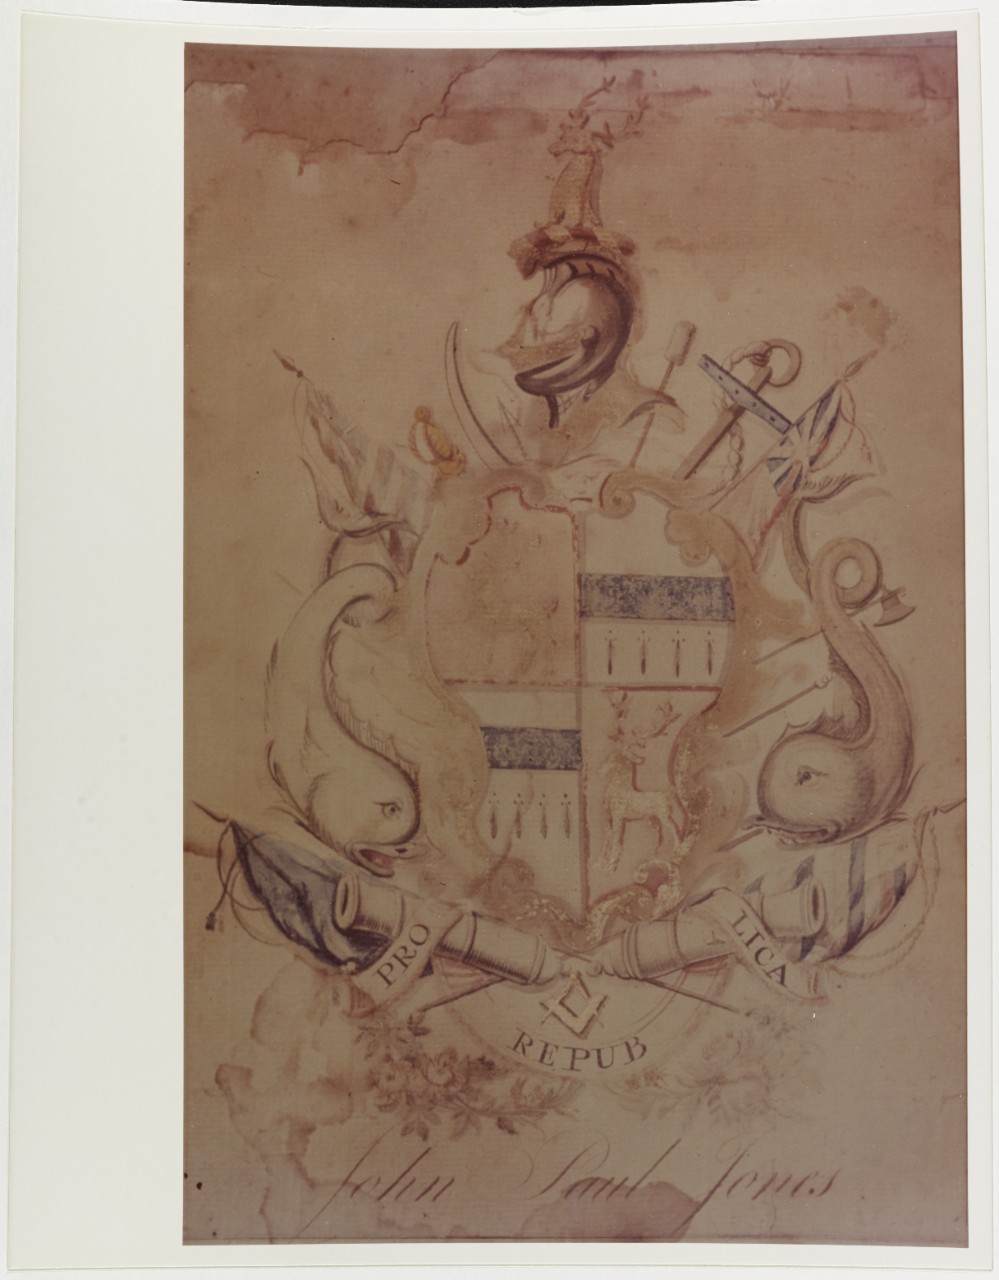 Painting of John Paul Jones' Achievement of Arms